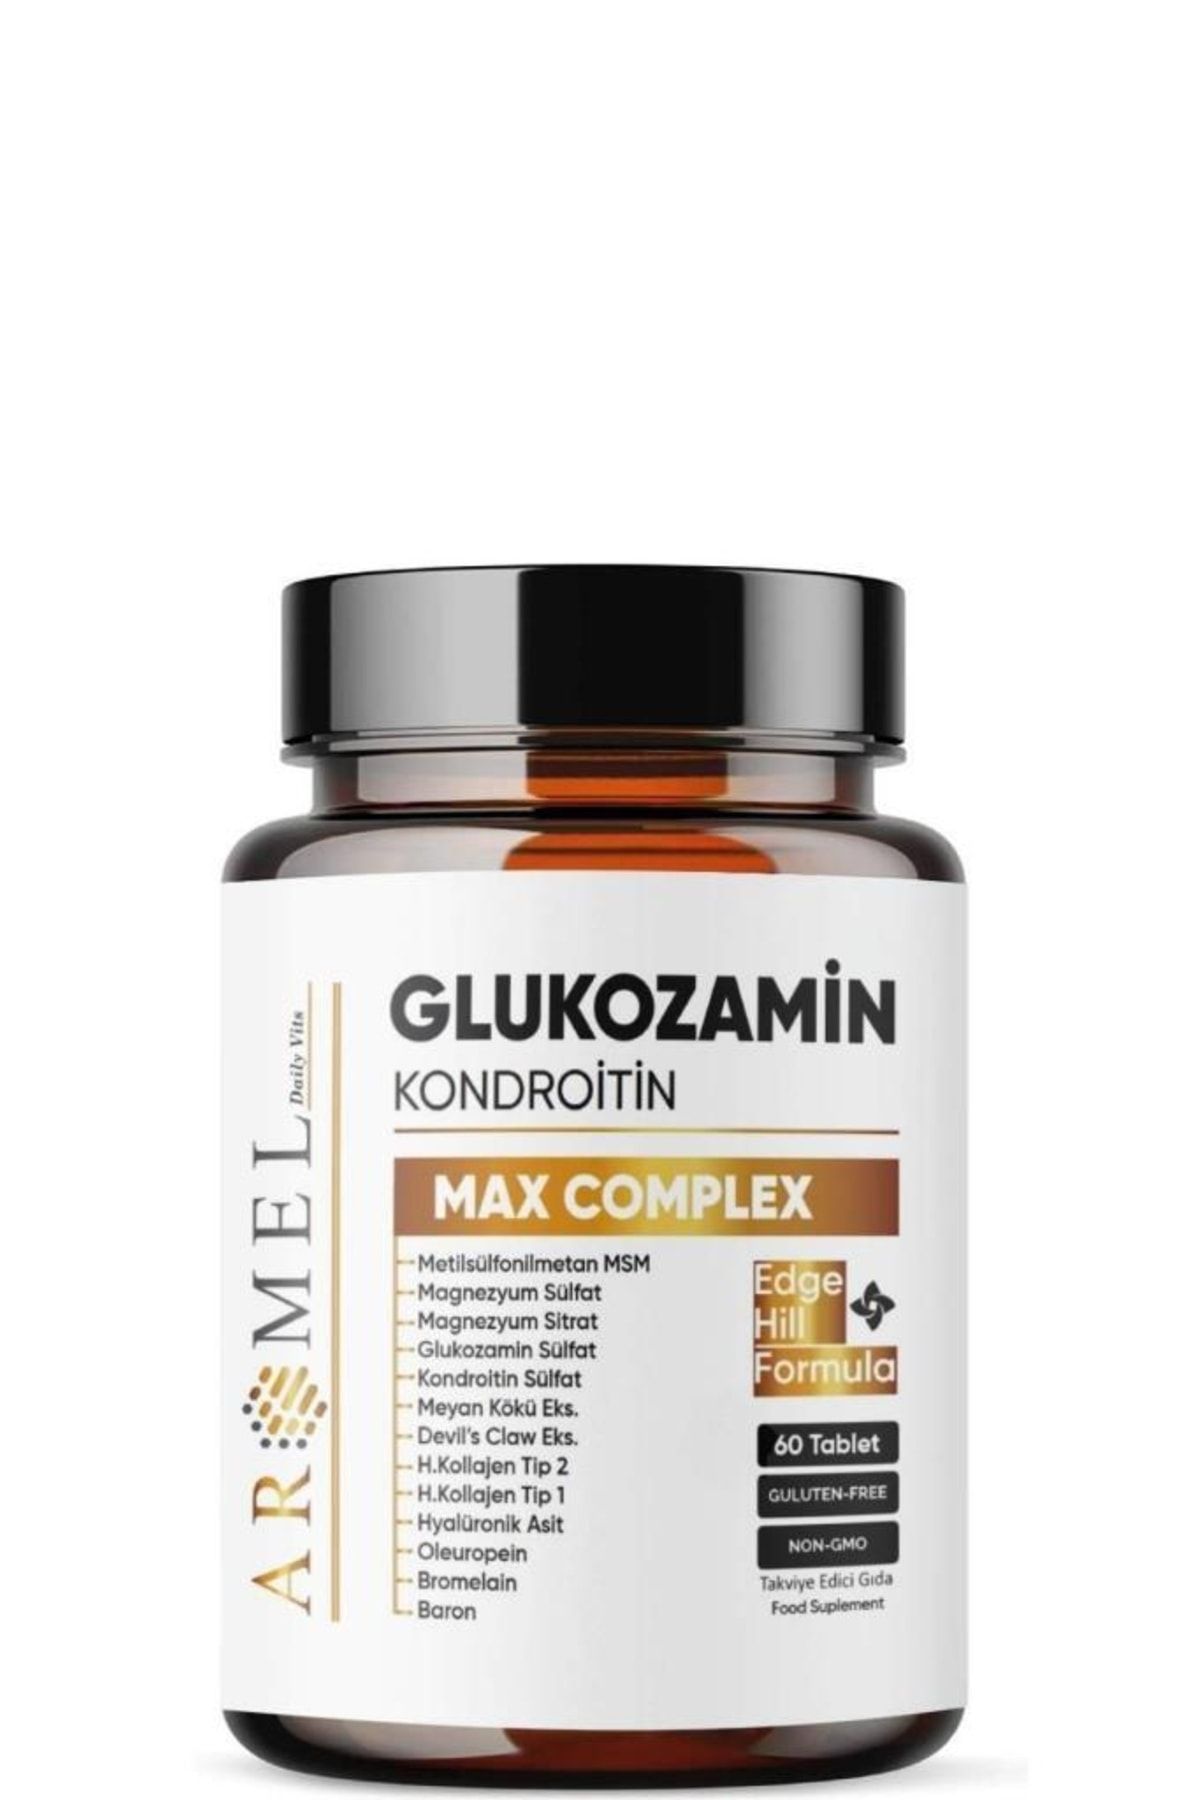 Aromel Glukozamin Kondroitin Msm, Max Complex | 60 Tablet | Uk Formül, Boswellia,bromelain,oleuropei